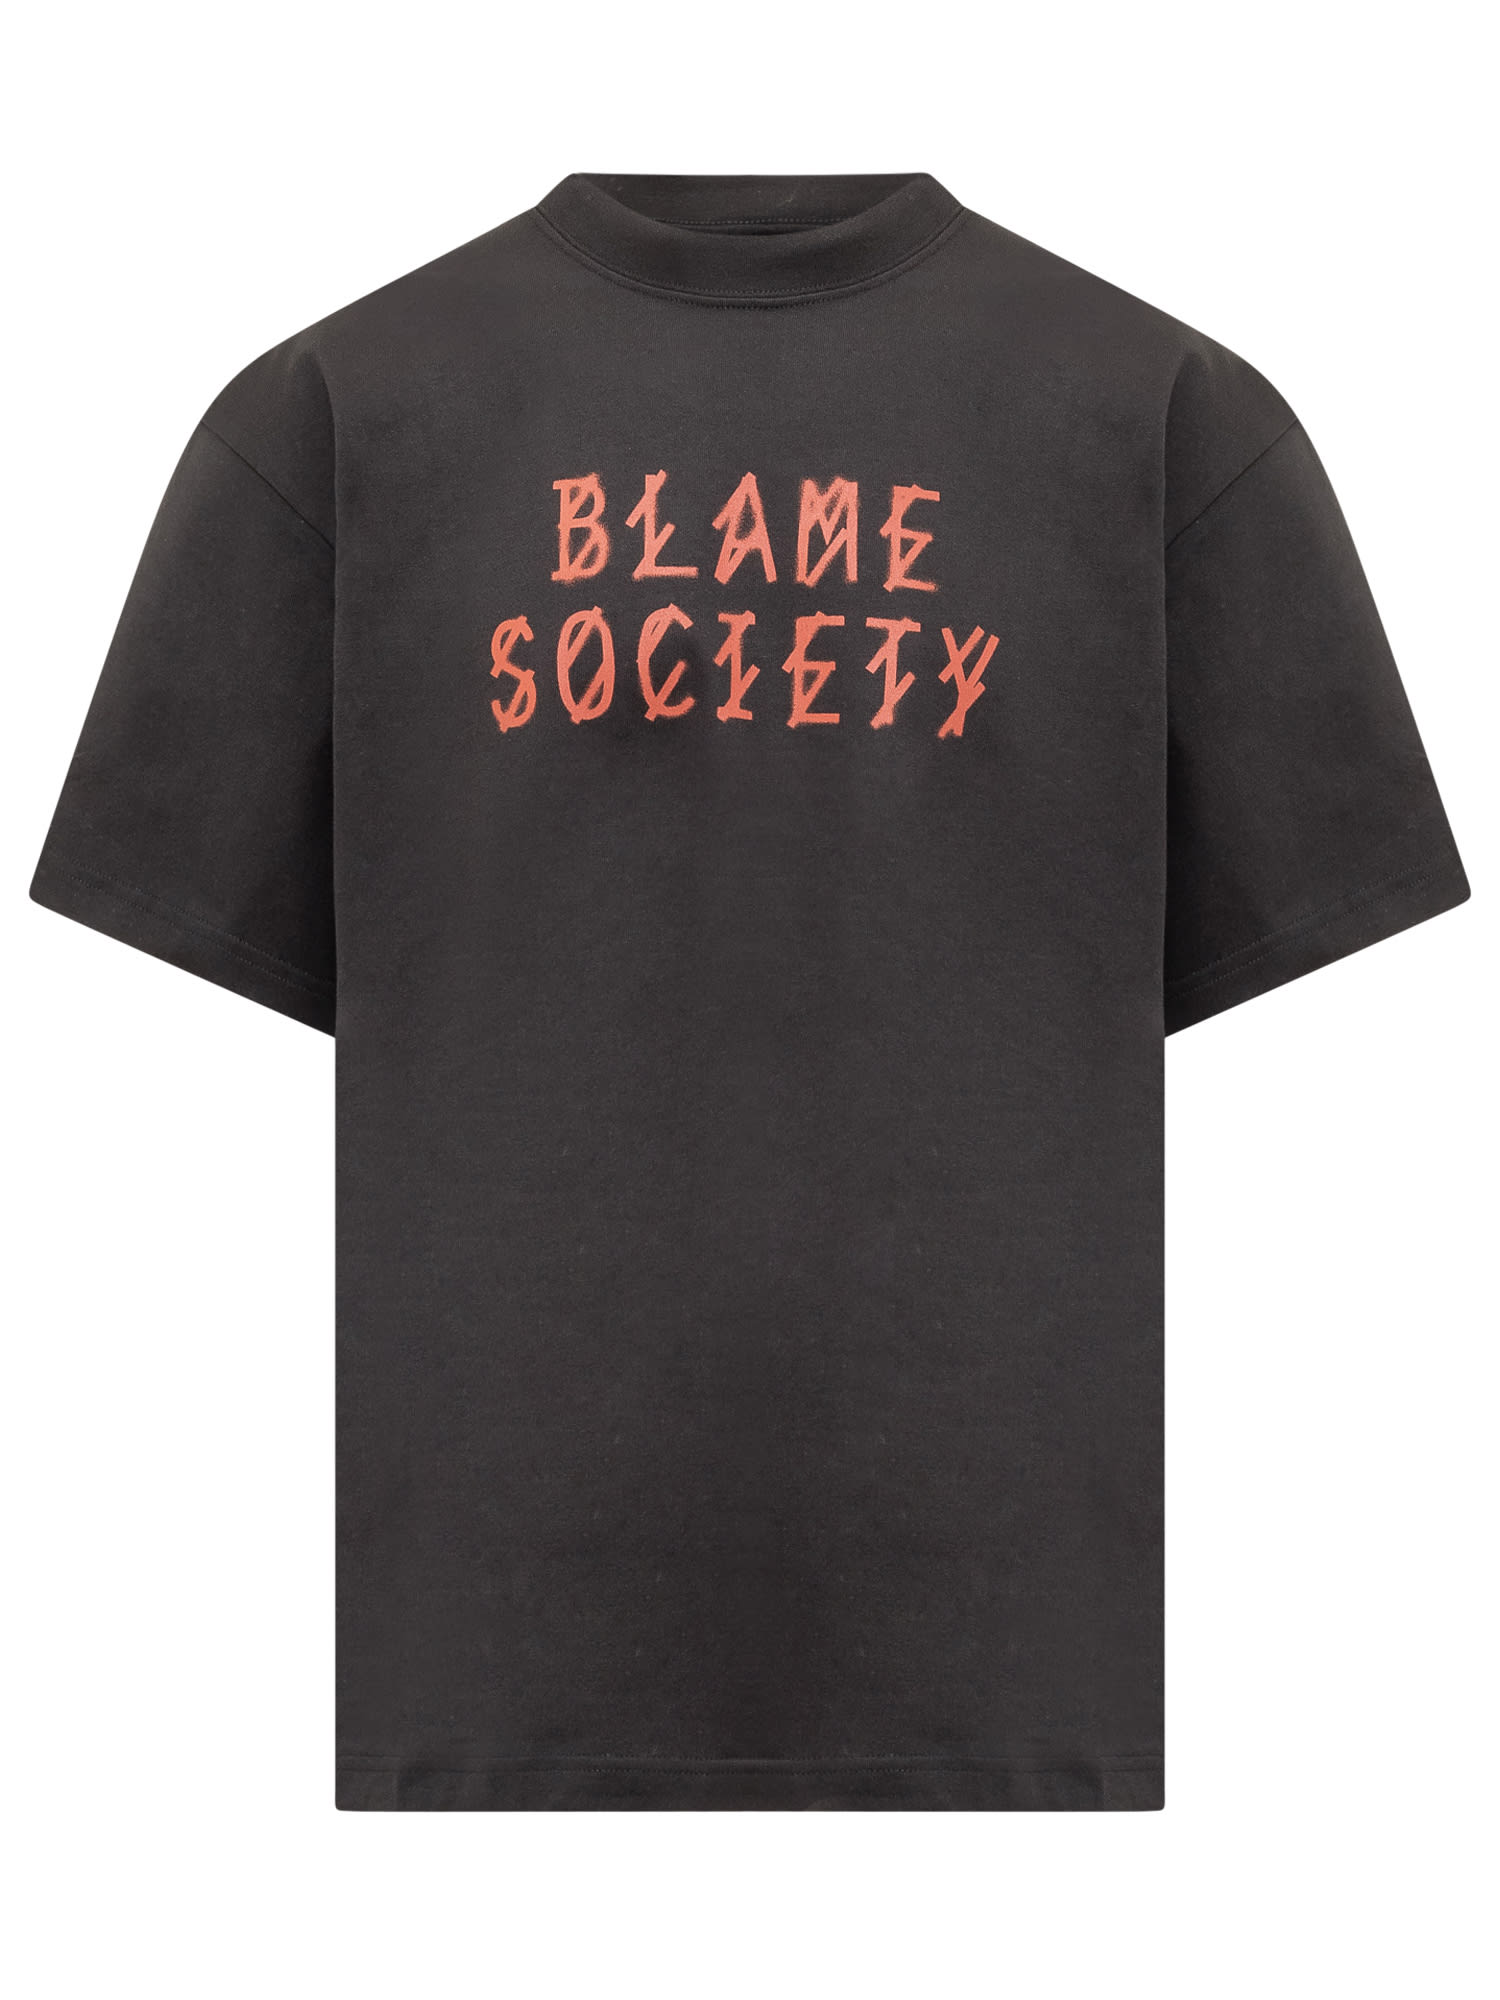 Blame Society T-shirt